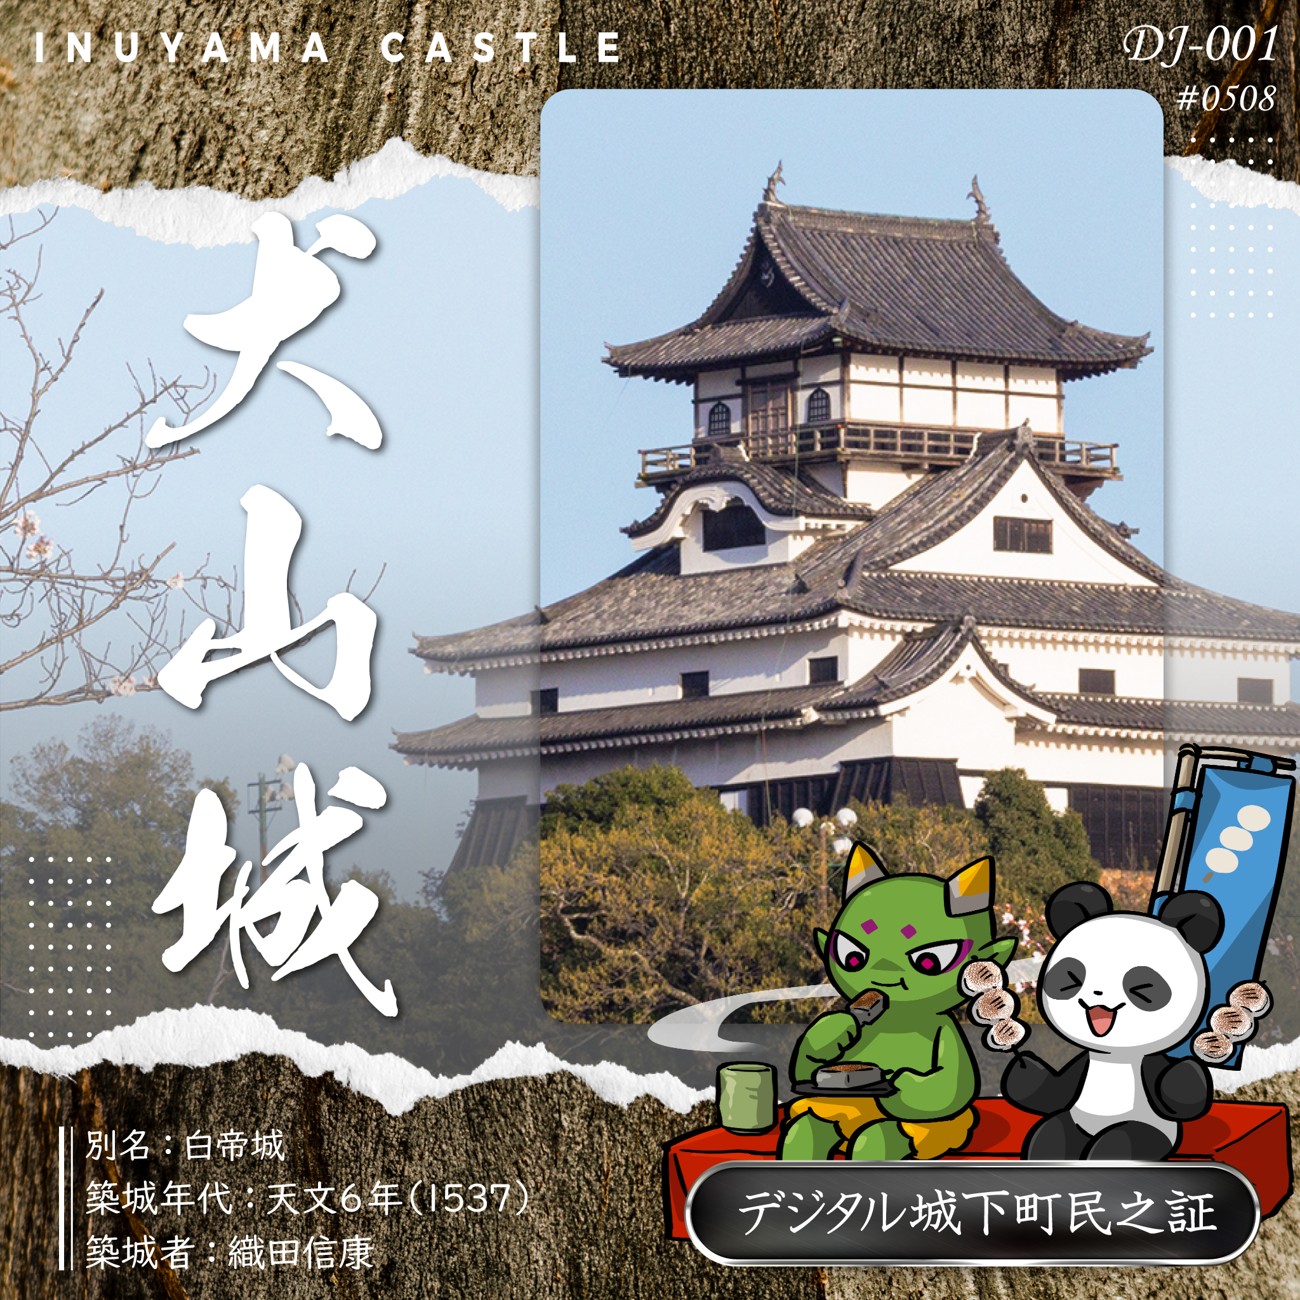 Inuyama Castle #0508